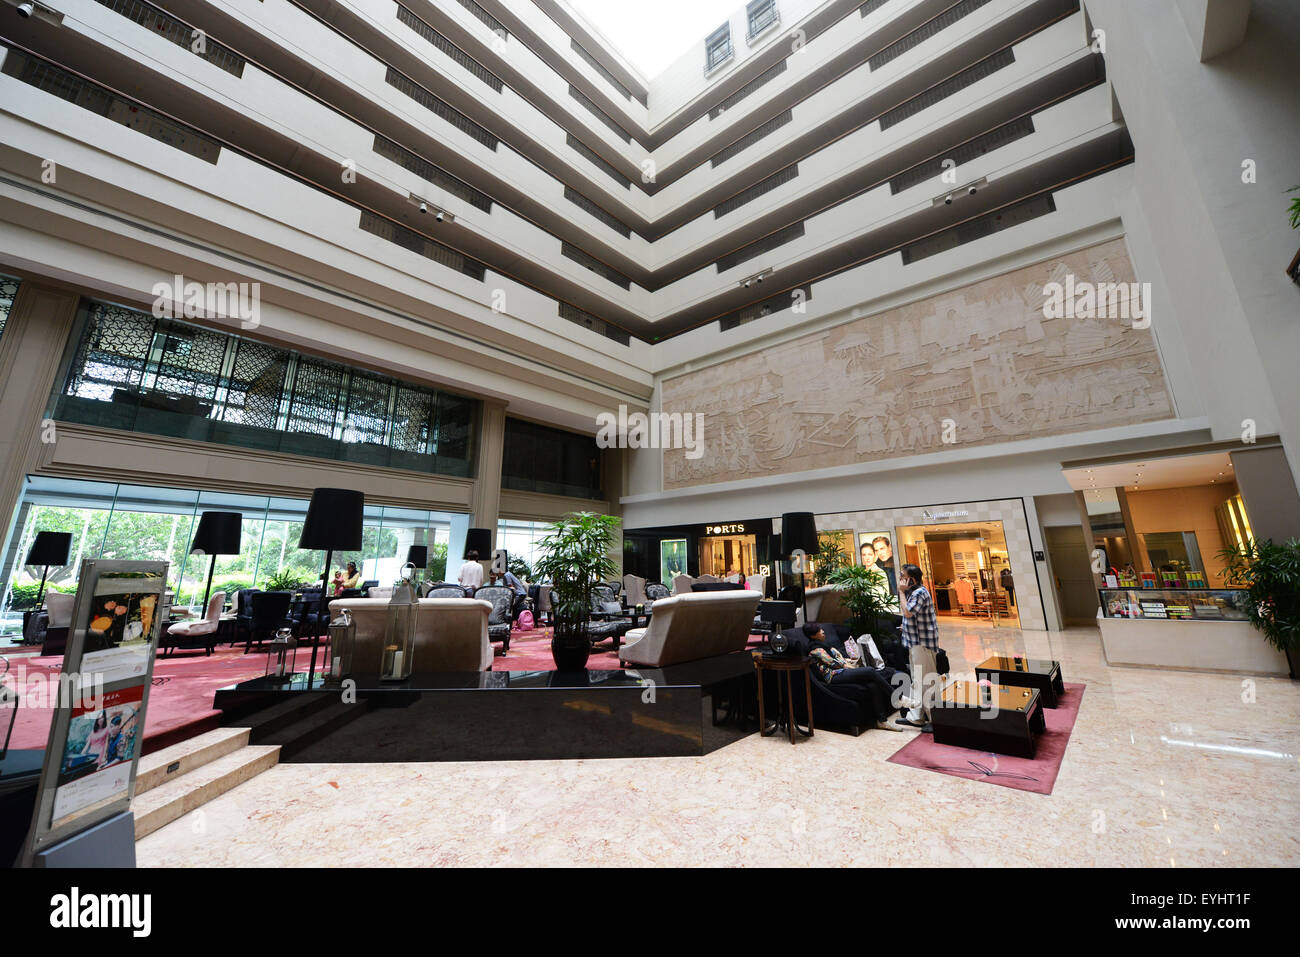 The interior of the Marco Polo hotel in Xiamen Stock Photo - Alamy